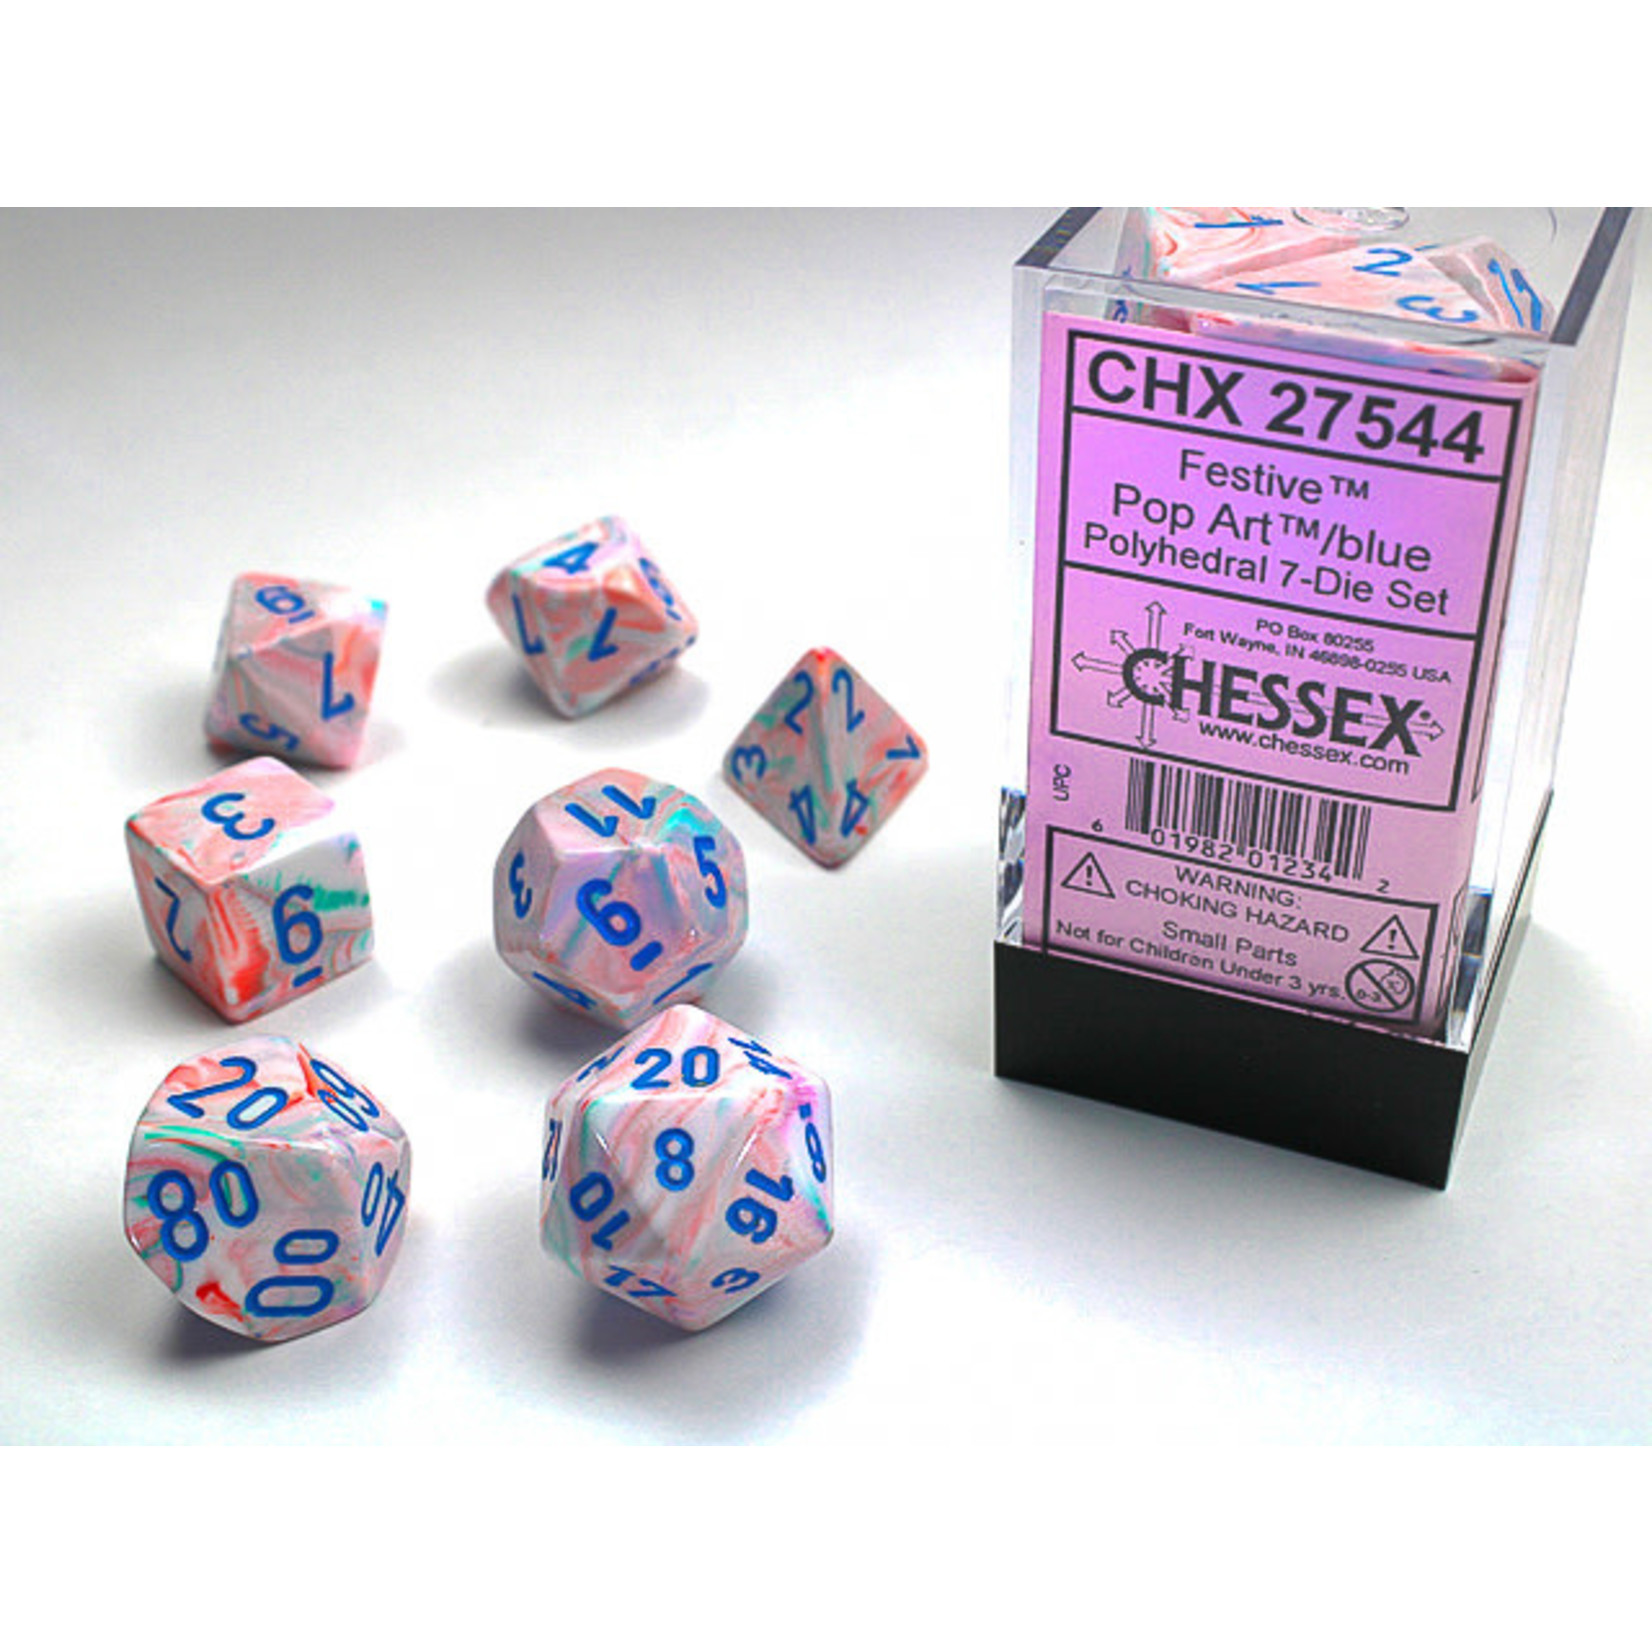 Chessex Dice RPG 27544 7pc Festive Pop-Art/Blue